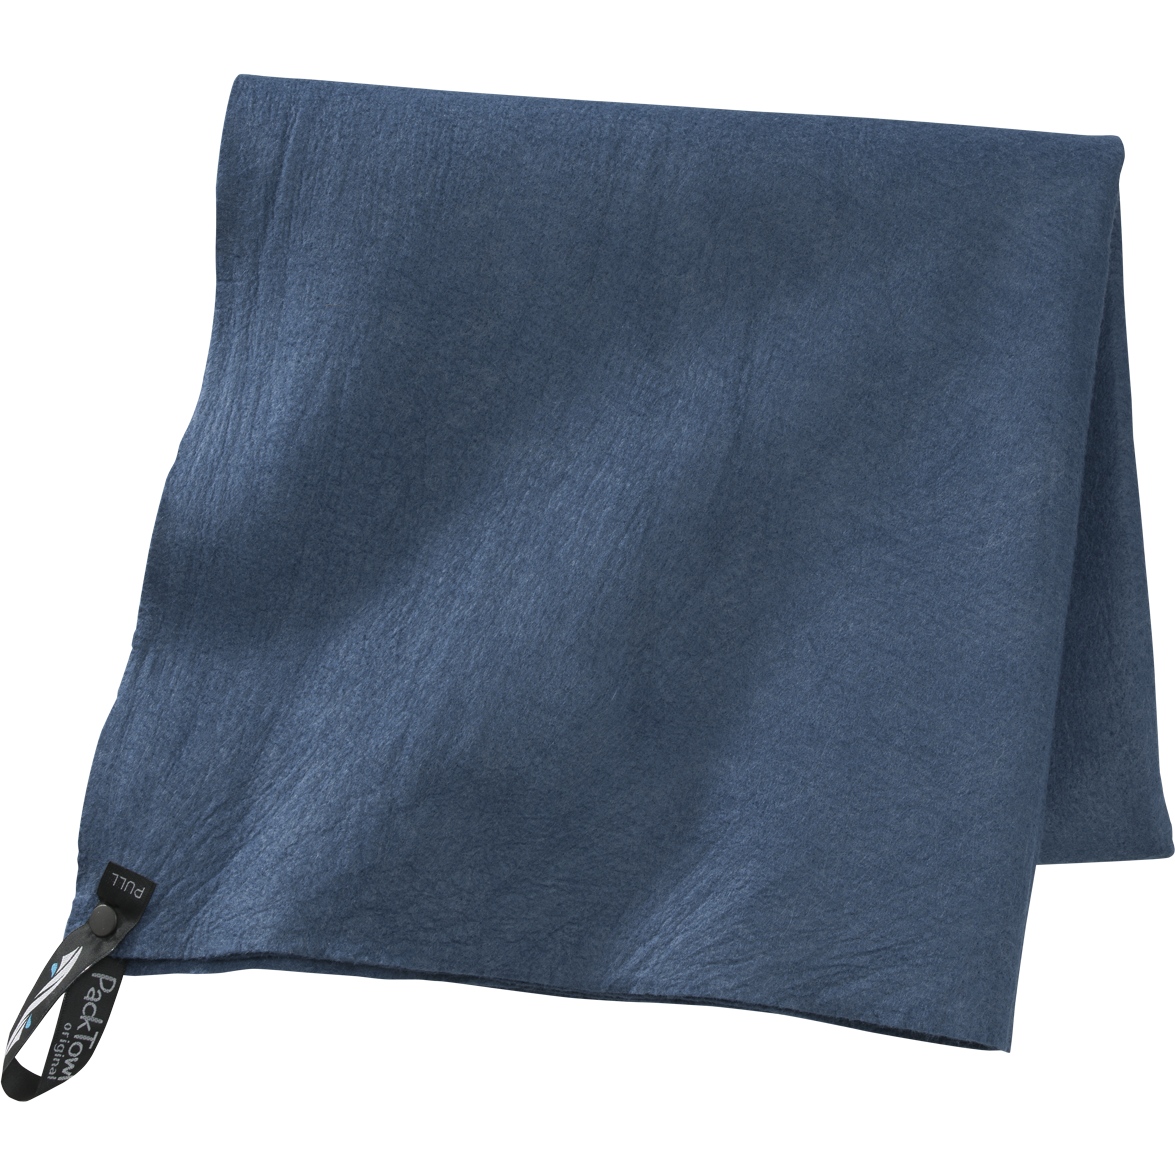 Picture of PackTowl Original L Towel - blue